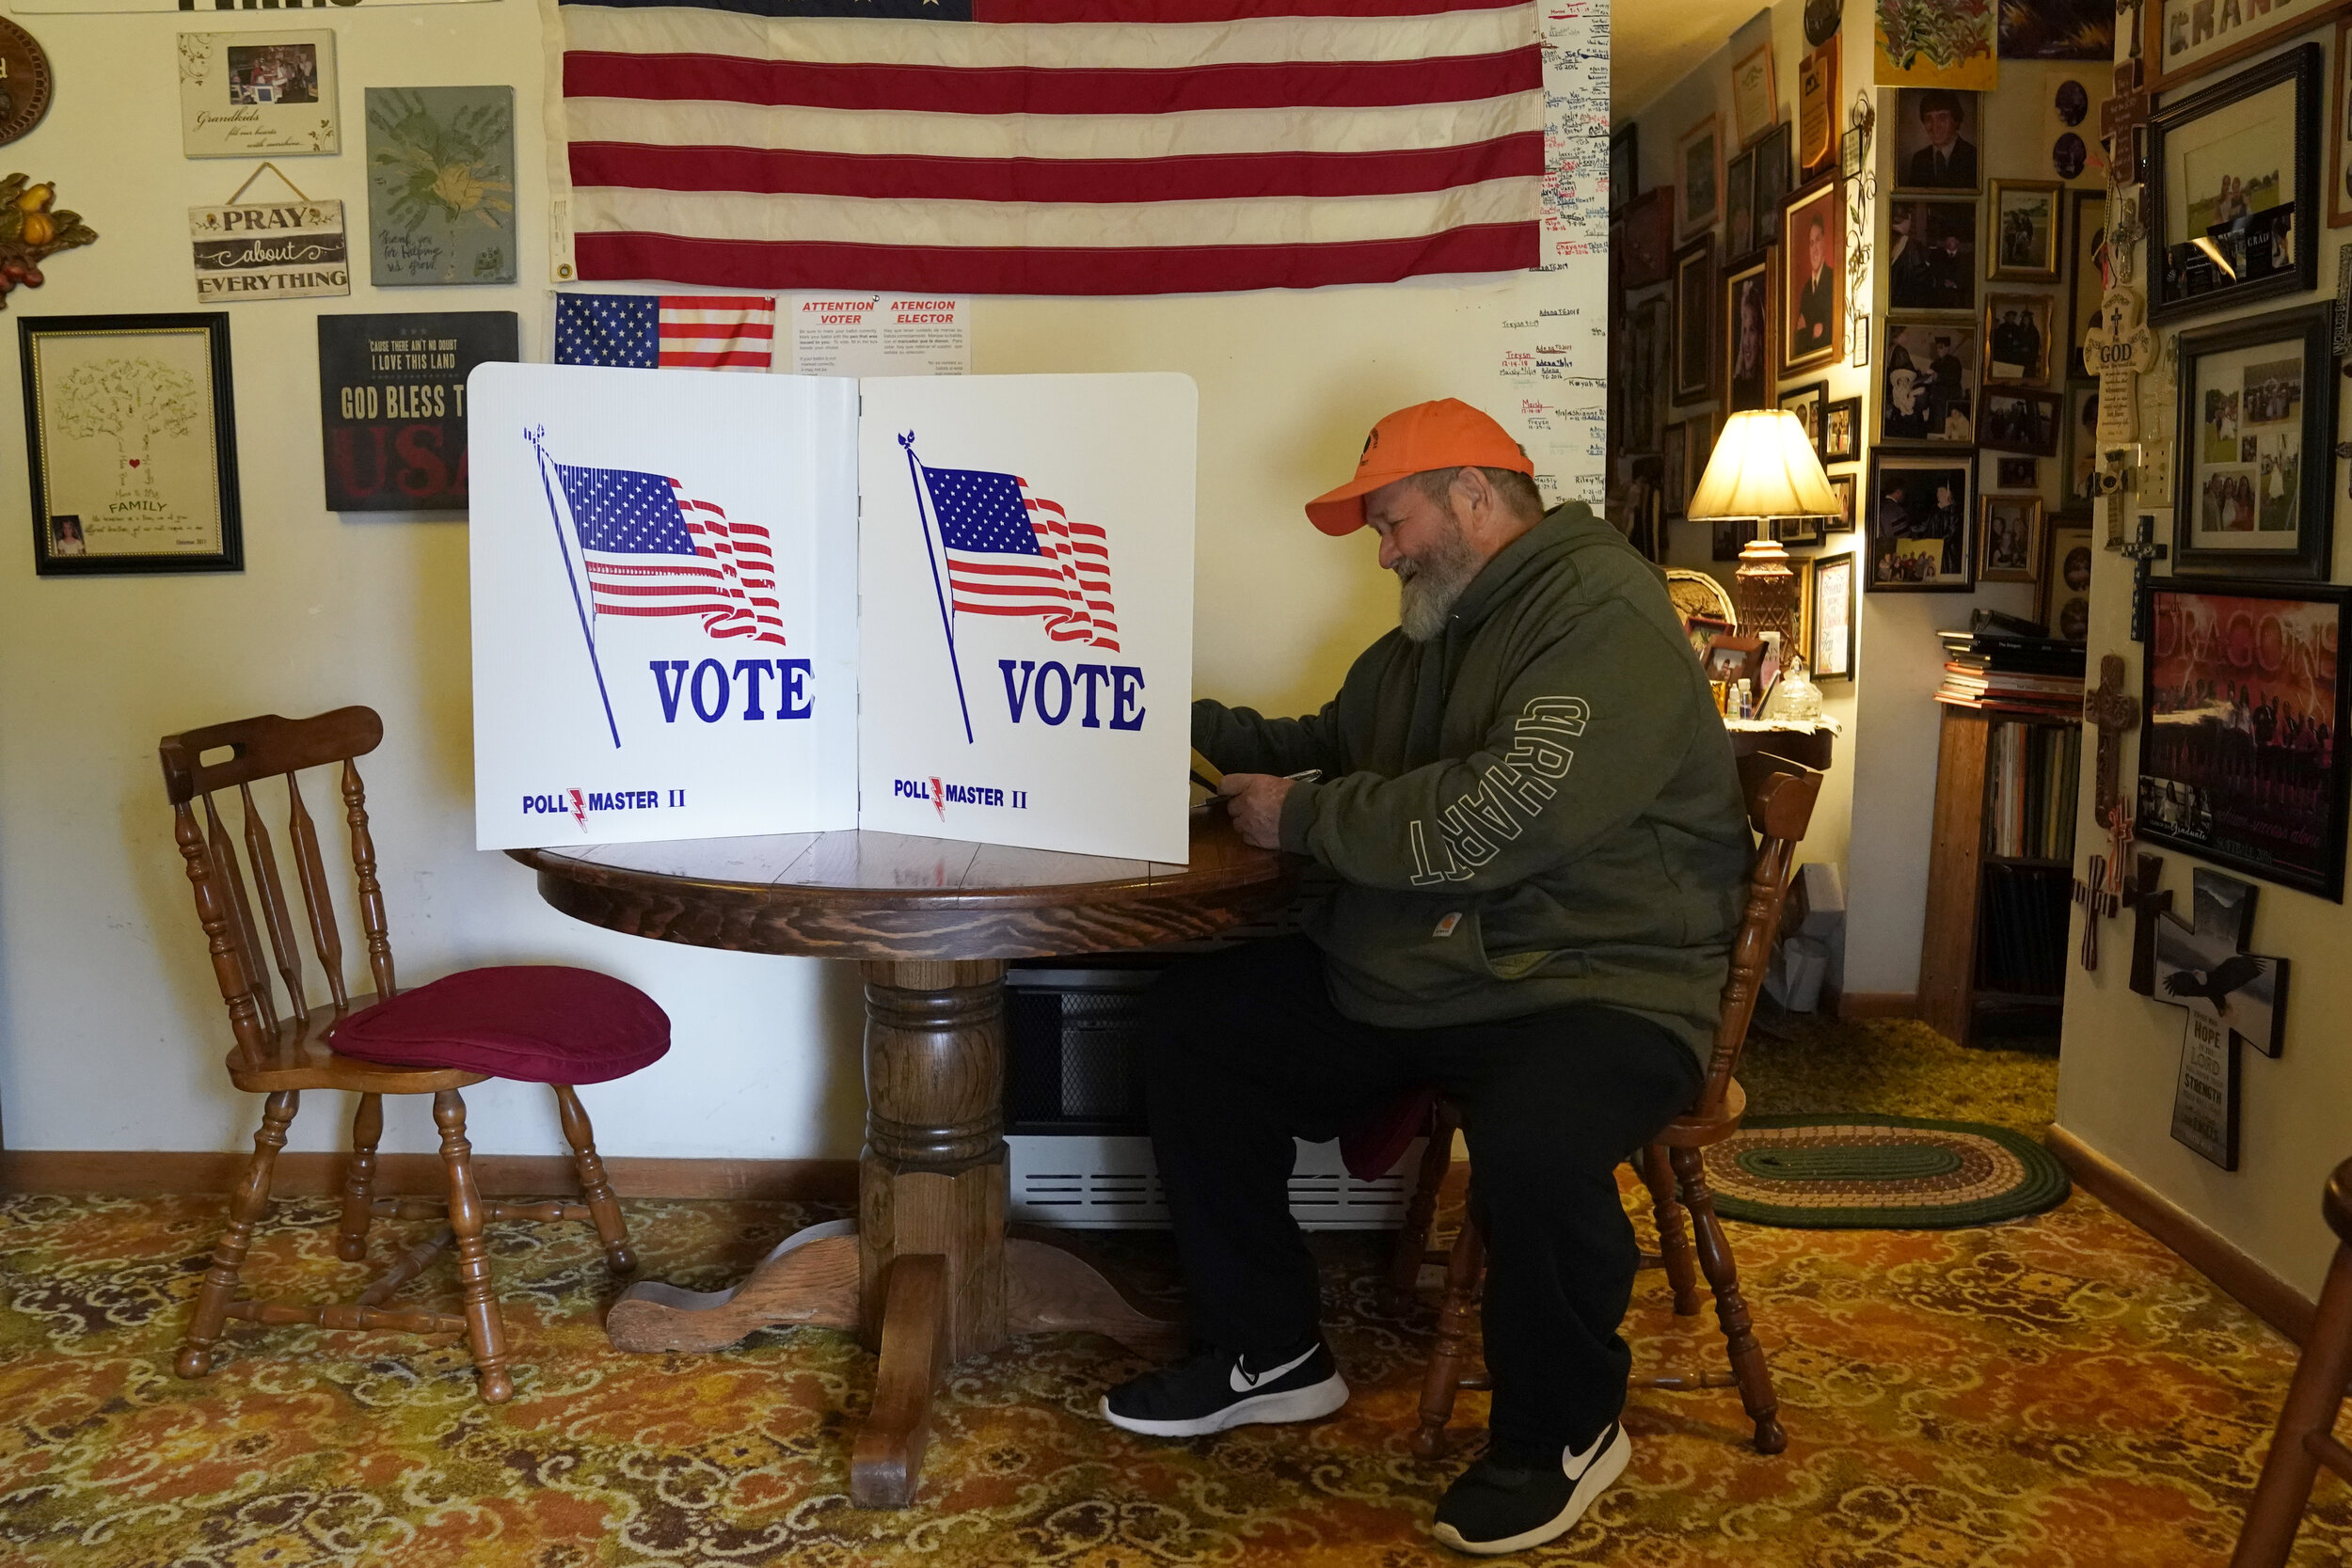 USA-ELECTION/VOTING